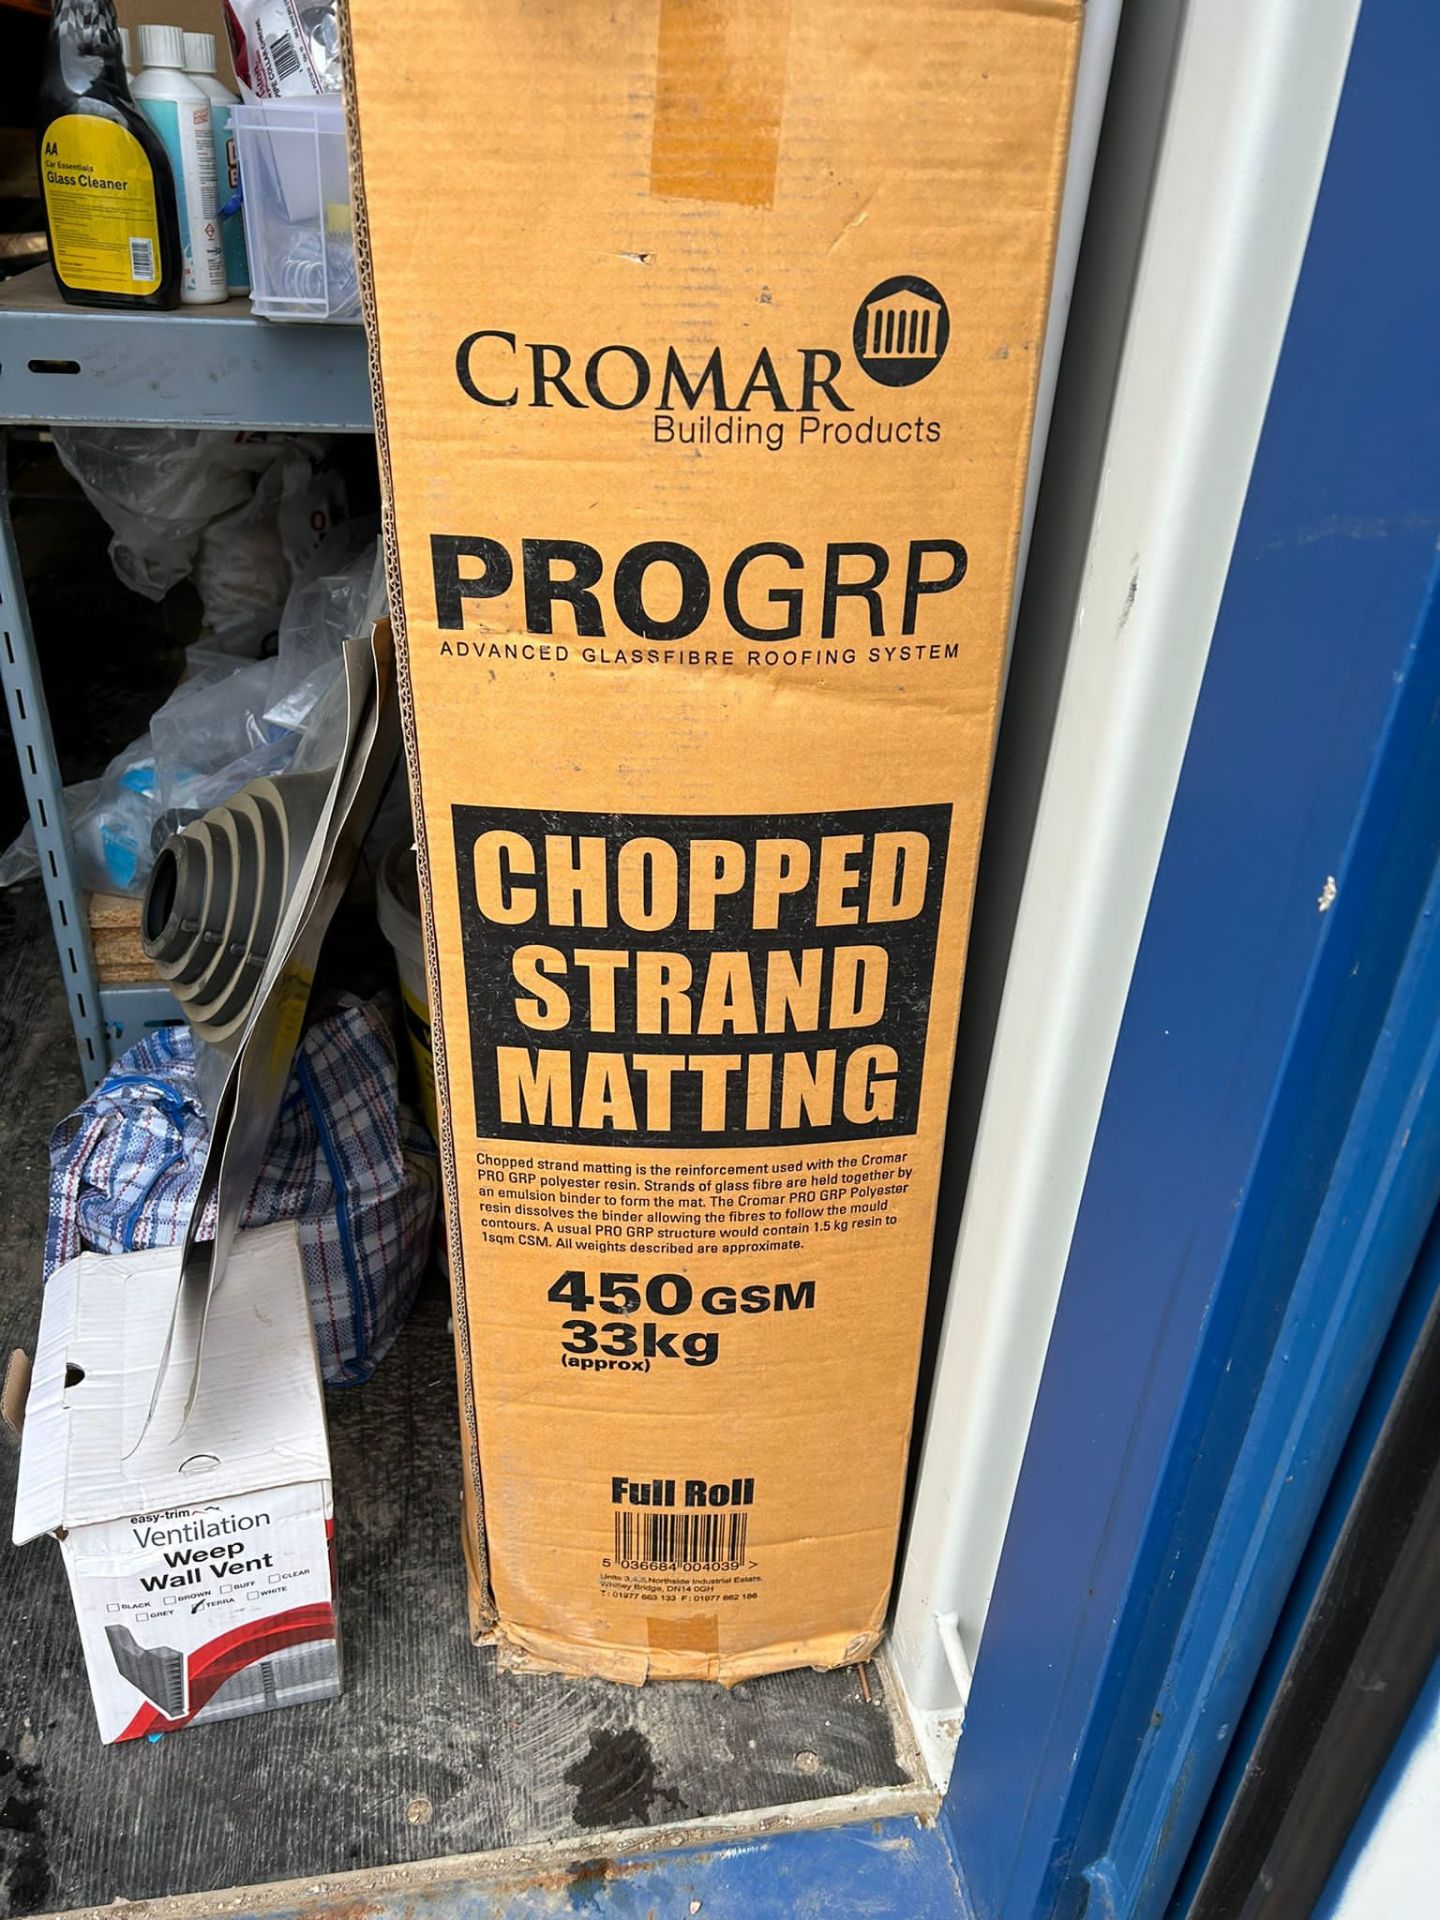 Roll Cromer pro grip matting 450gsm 33kg - Image 2 of 4